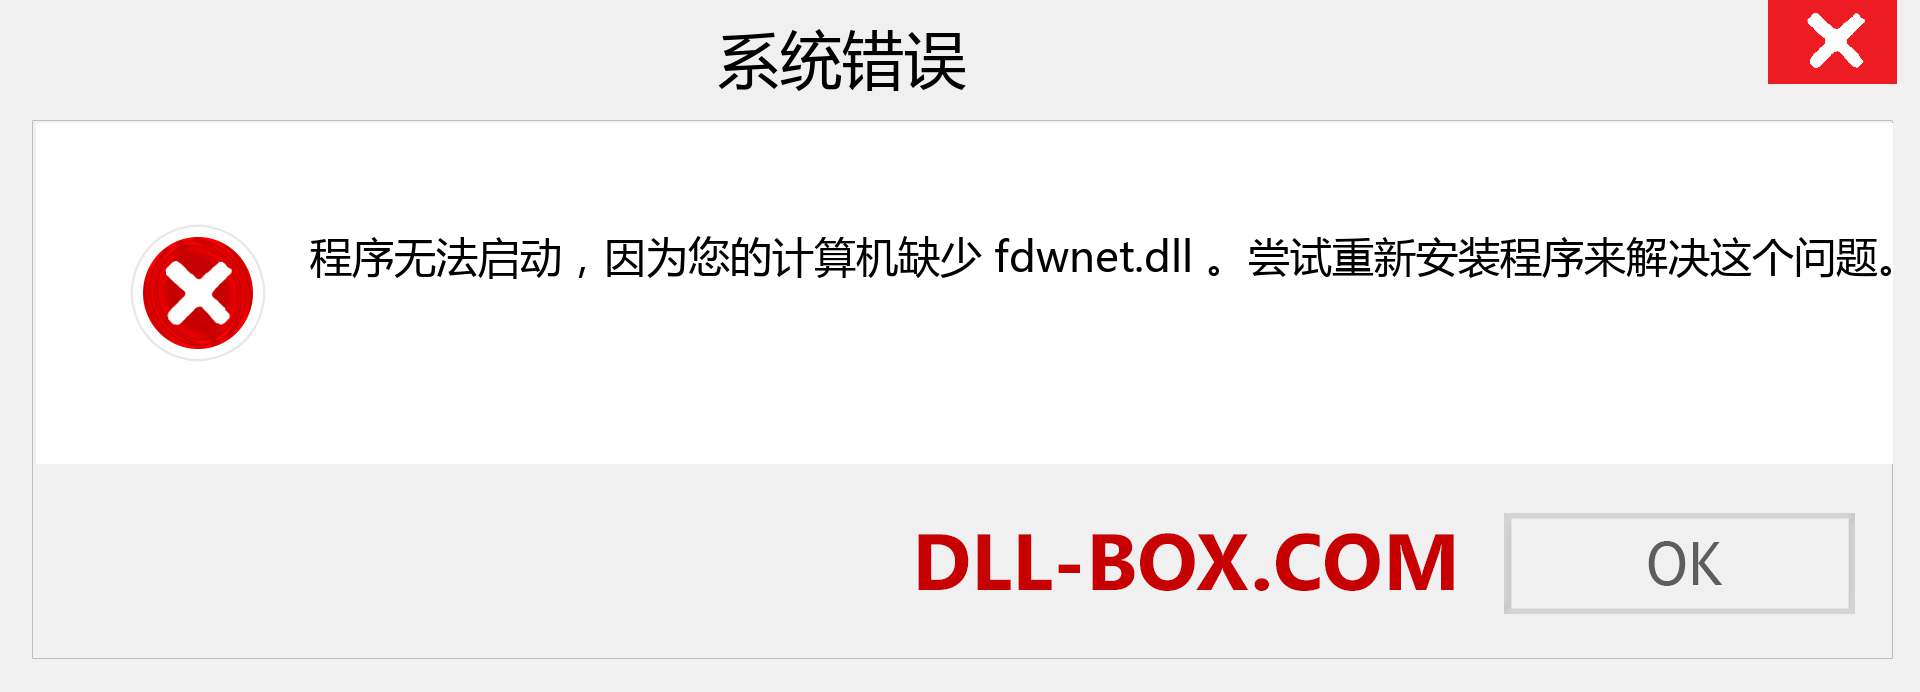 fdwnet.dll 文件丢失？。 适用于 Windows 7、8、10 的下载 - 修复 Windows、照片、图像上的 fdwnet dll 丢失错误